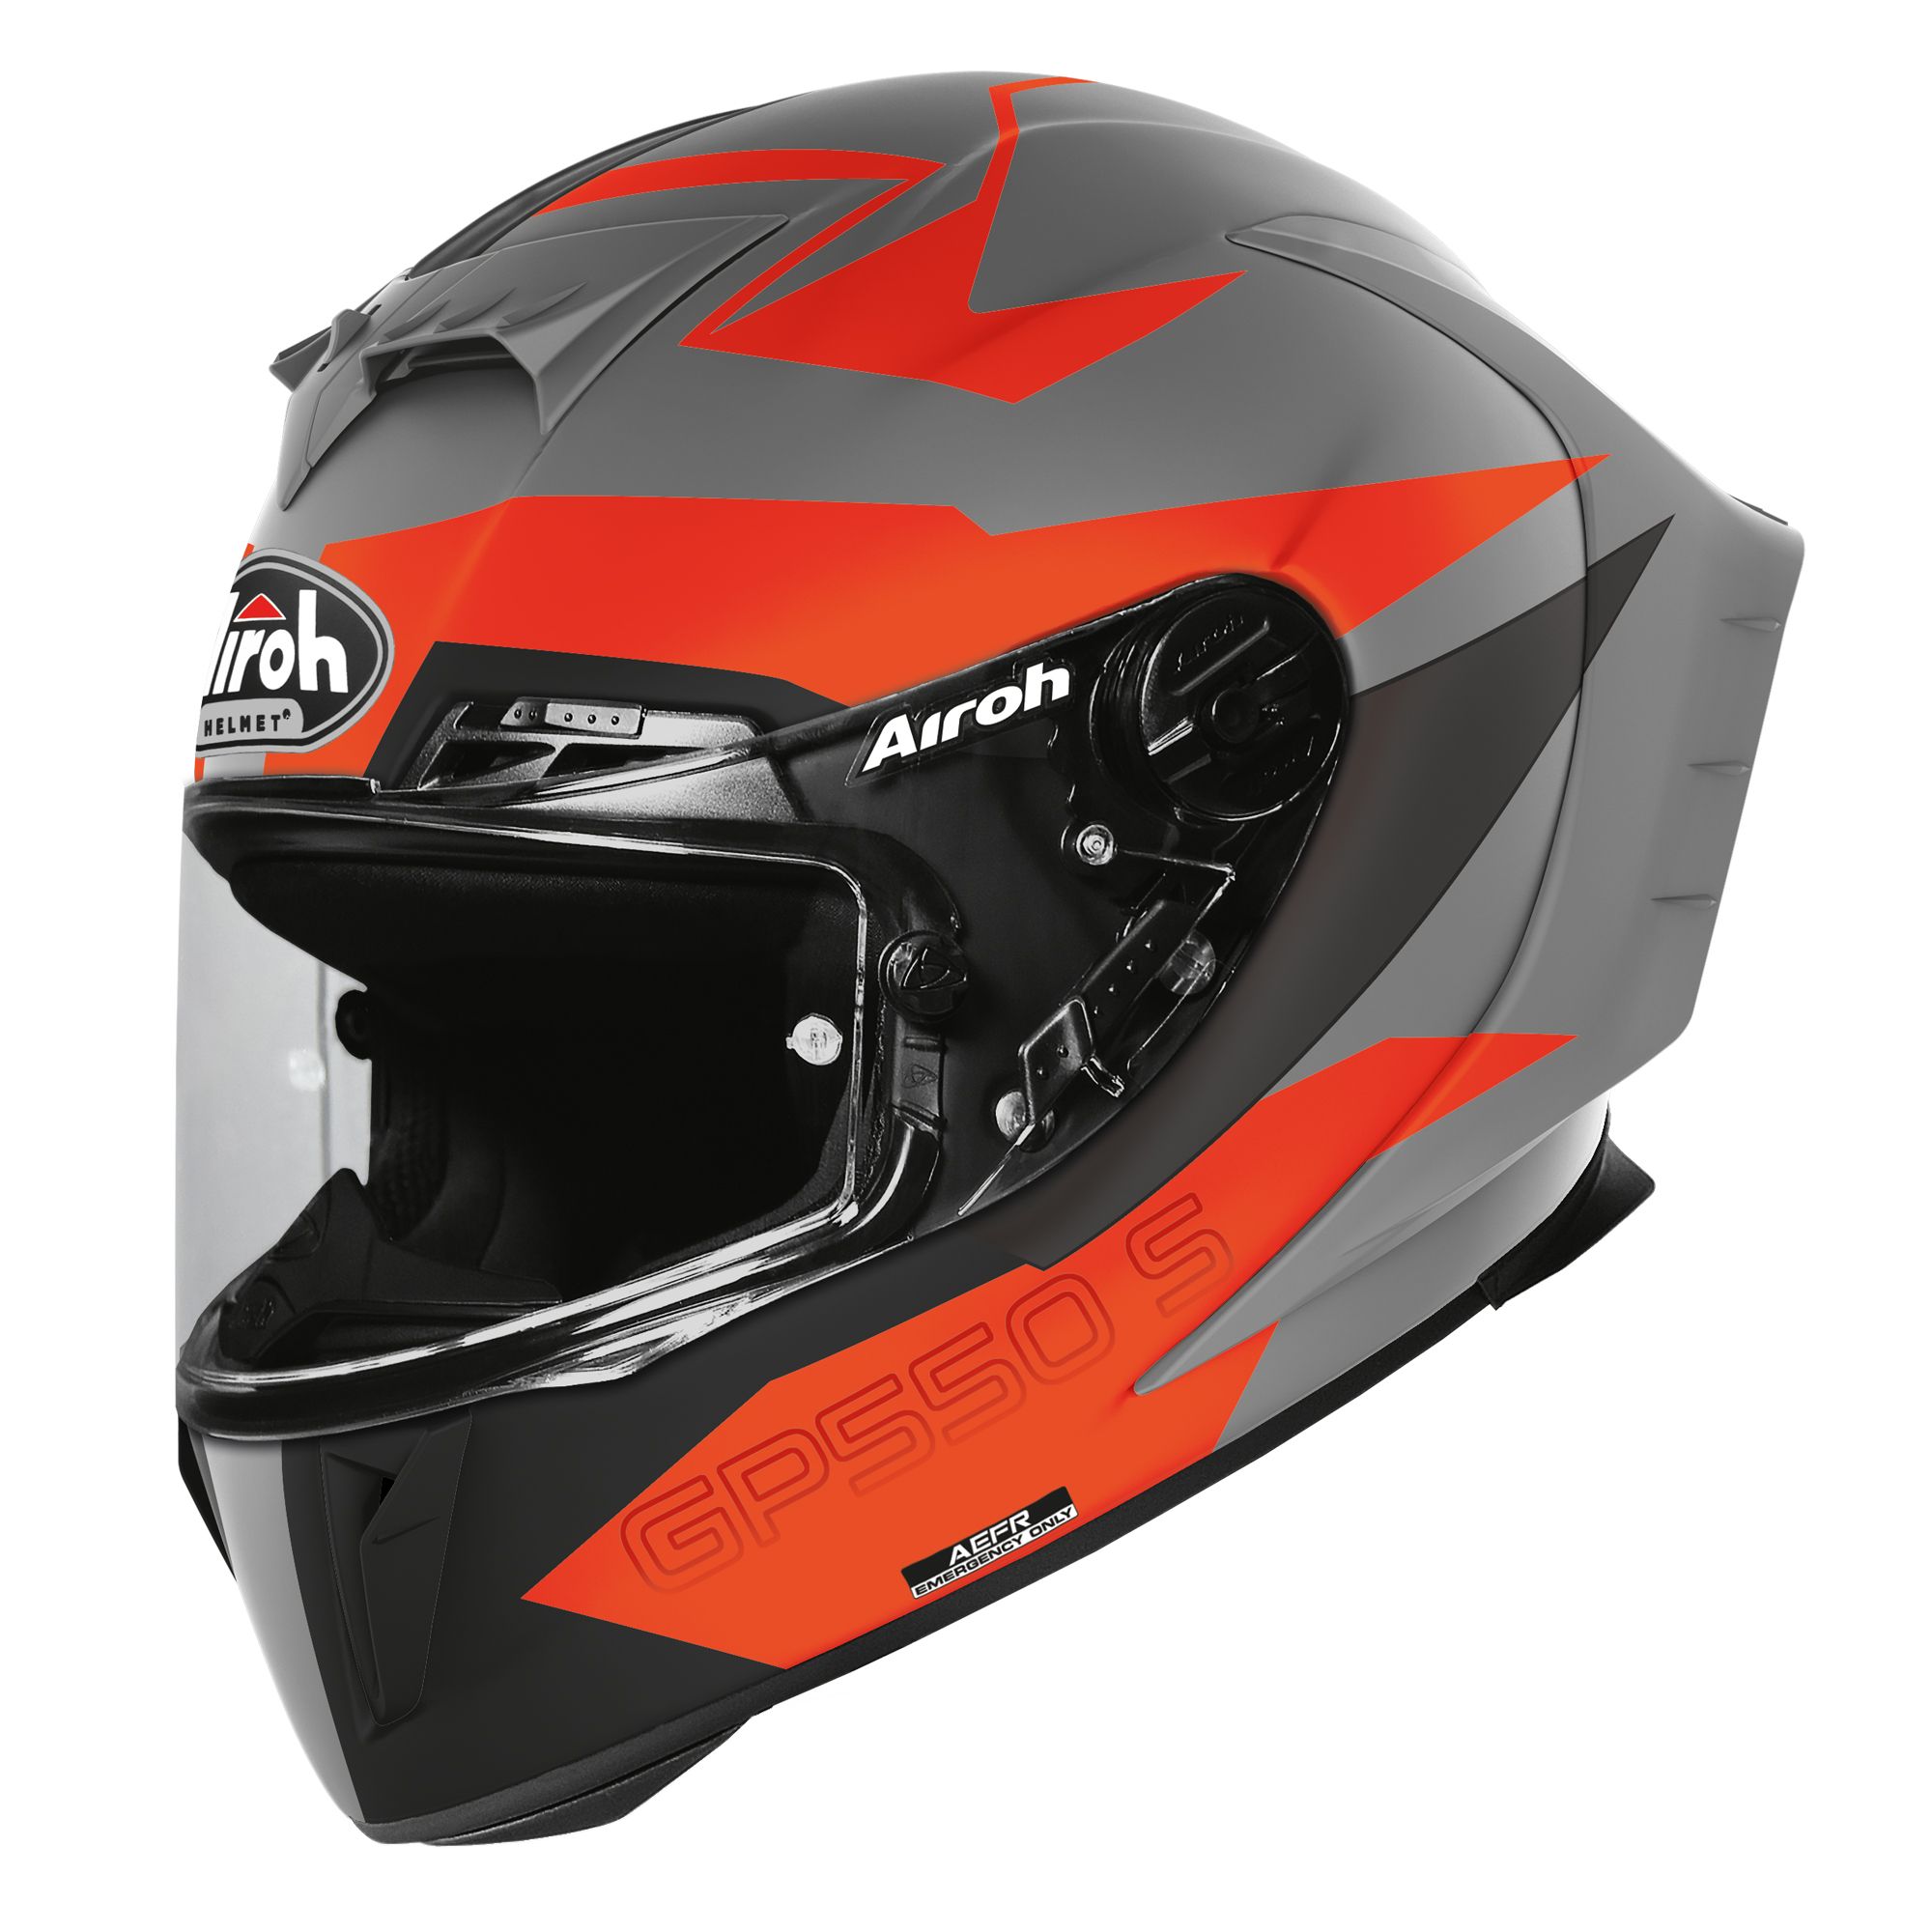  Airoh GP550S Full Face Helmet - Vektor Orange Matt (SIZES XS to XL)